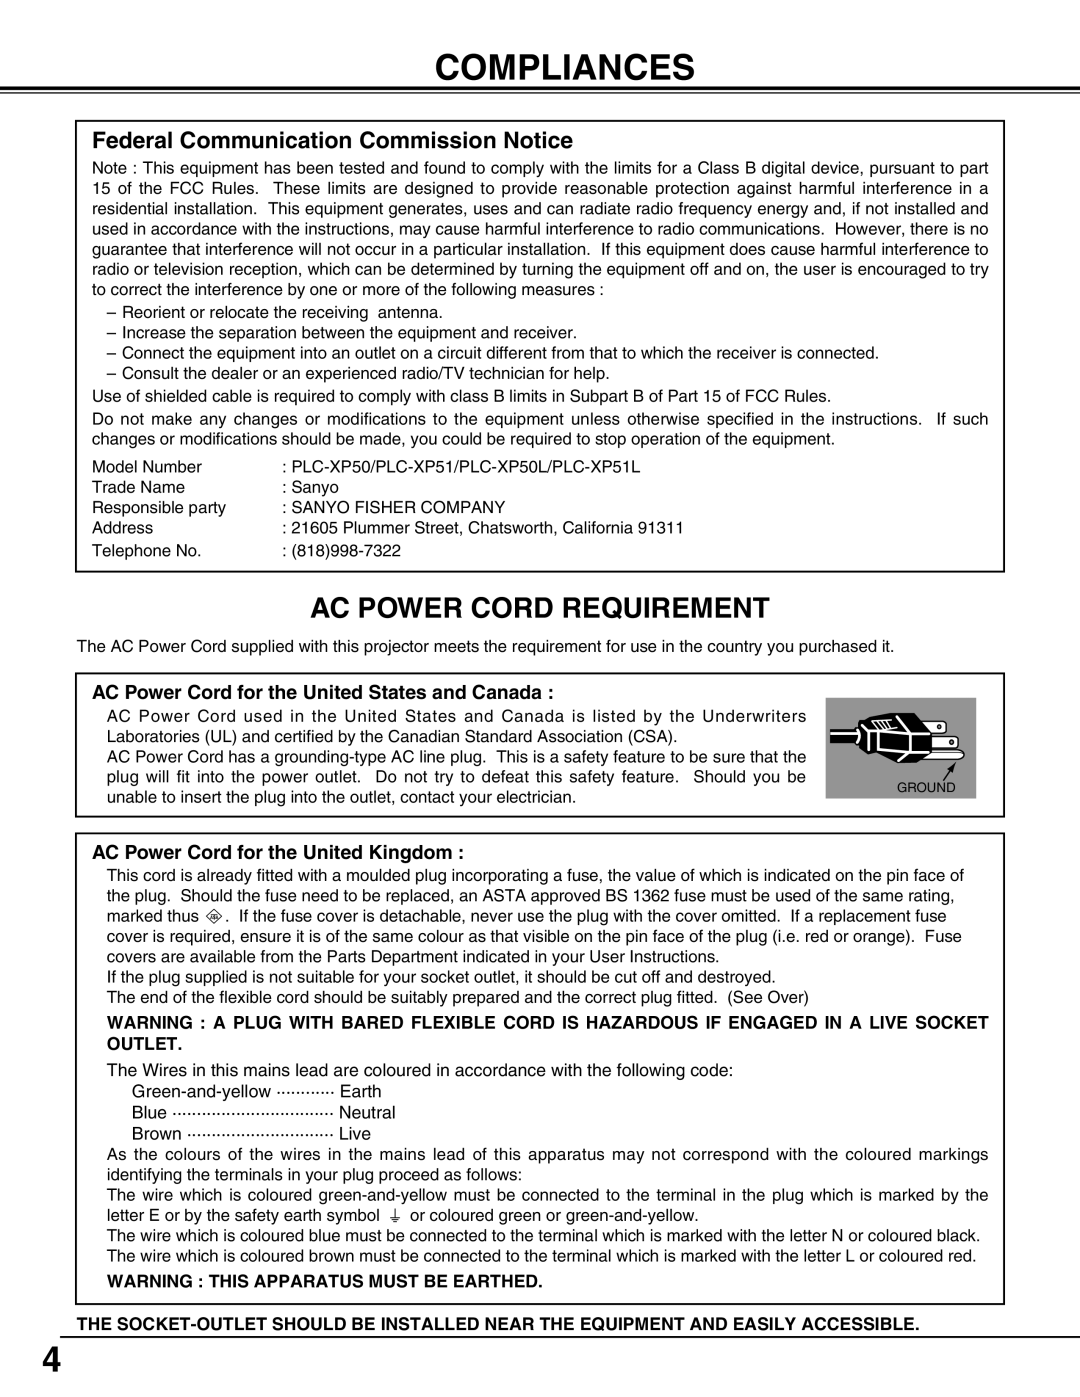 Sanyo XP51L, PLC-XP50L owner manual Compliances, Ac Power Cord Requirement, Federal Communication Commission Notice 